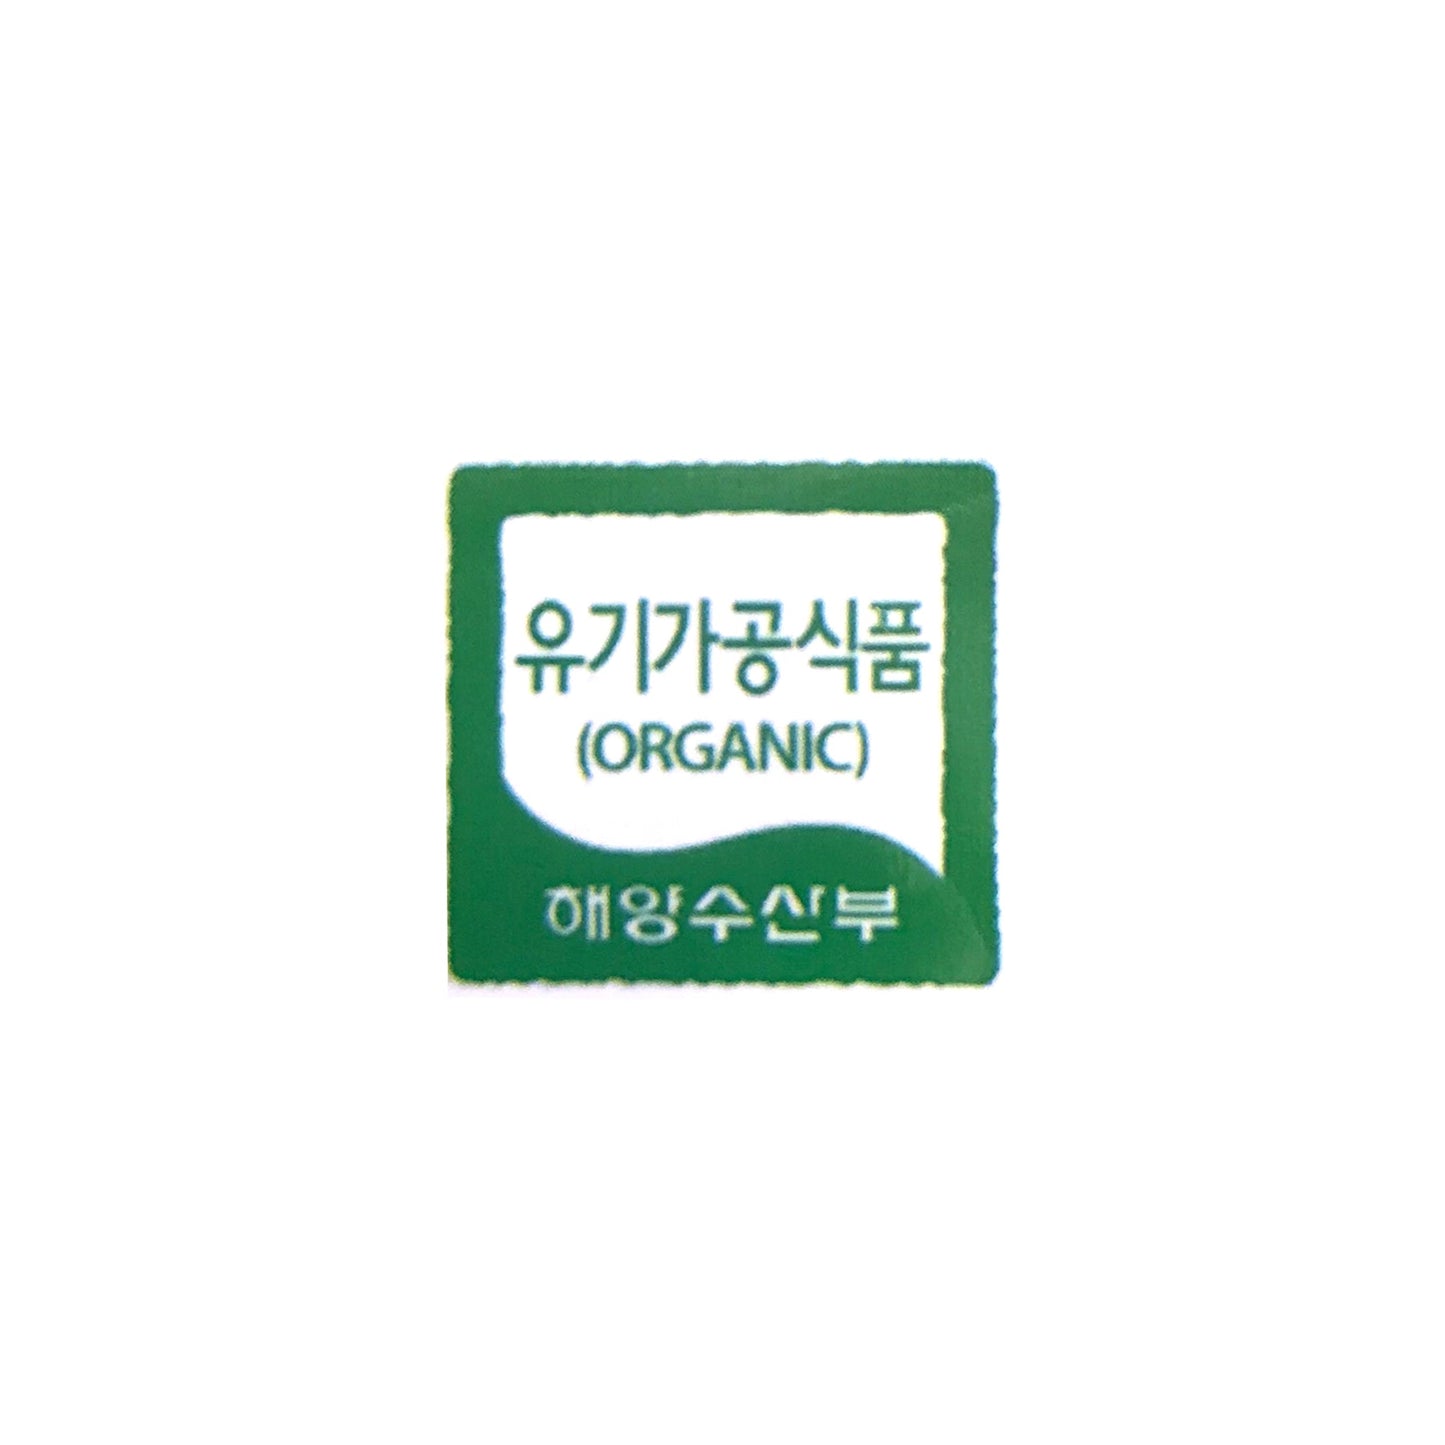 Double Roasted Organic Seaweed for Kimbap (Pack of 3) - Kim'C Market